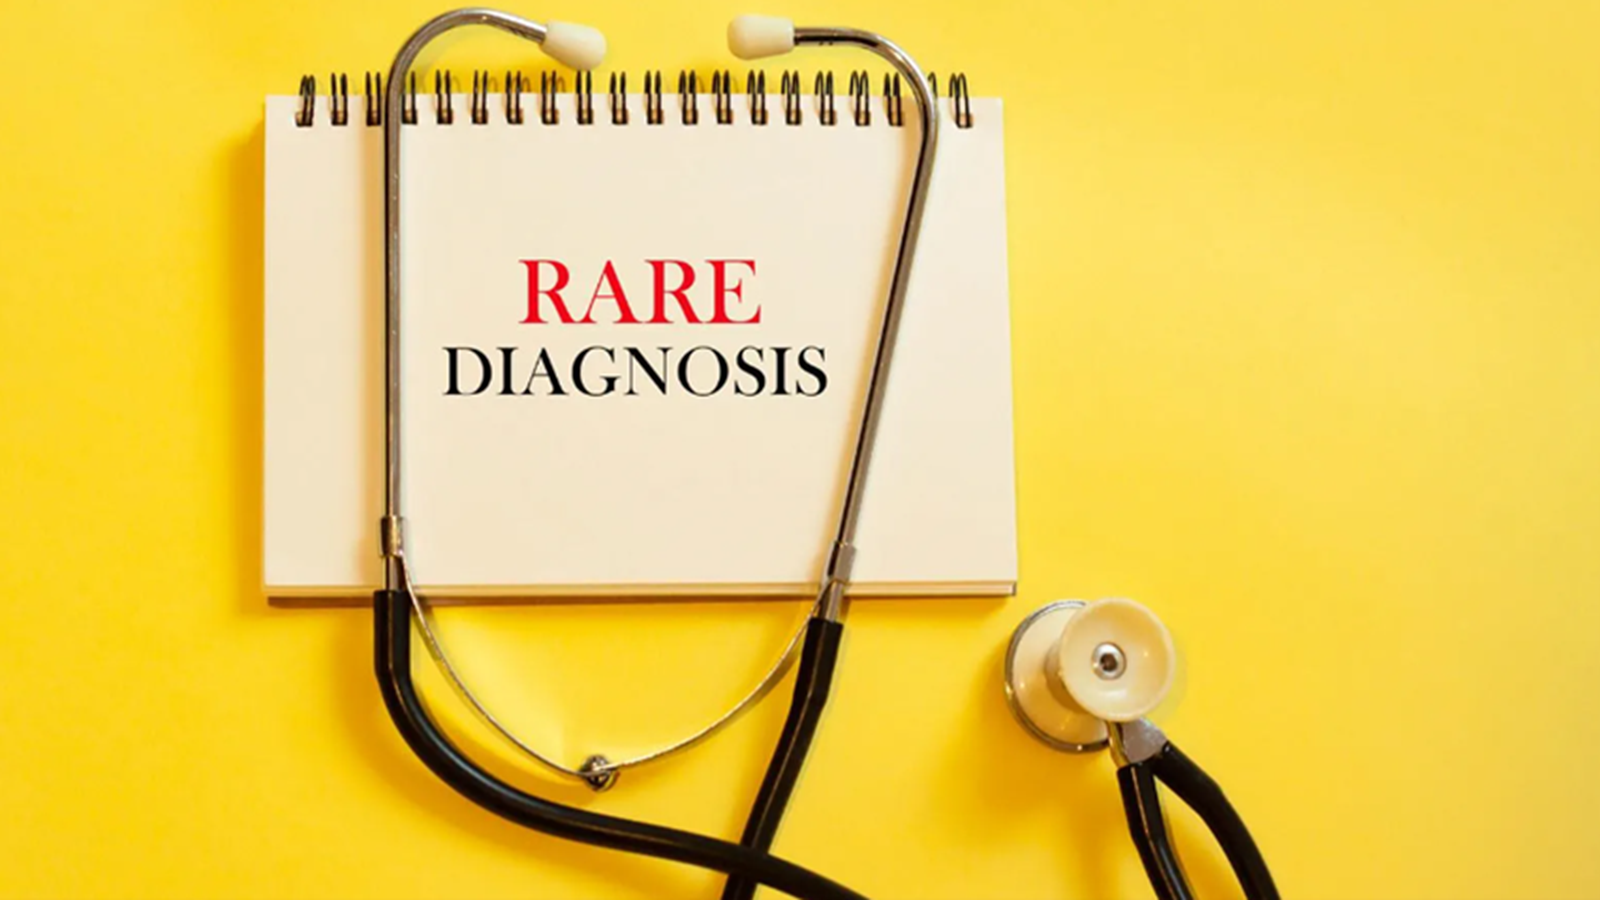 Rare diagnosis and stethoscope